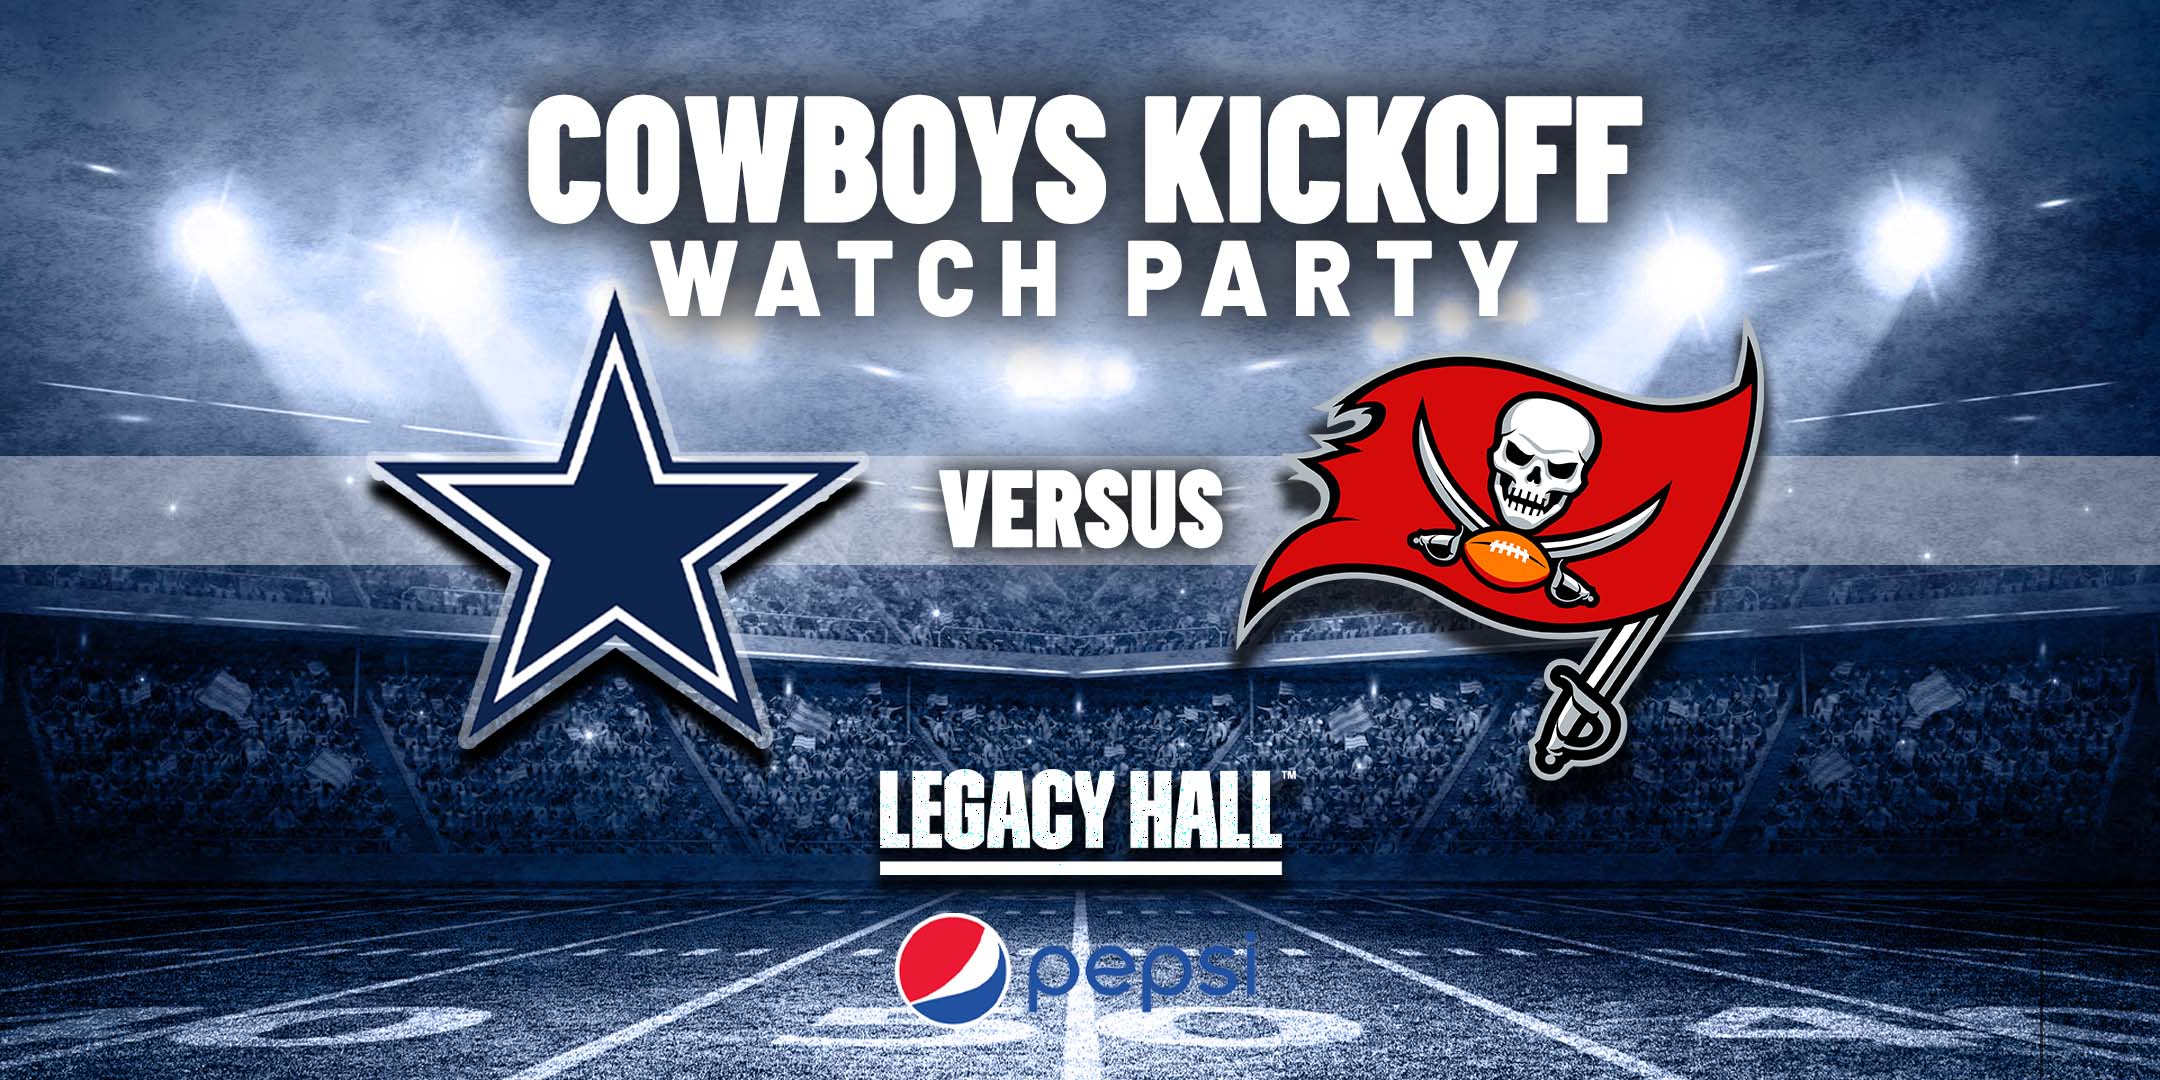 Cowboys Kickoff Watch Party 2022 Facebook Image